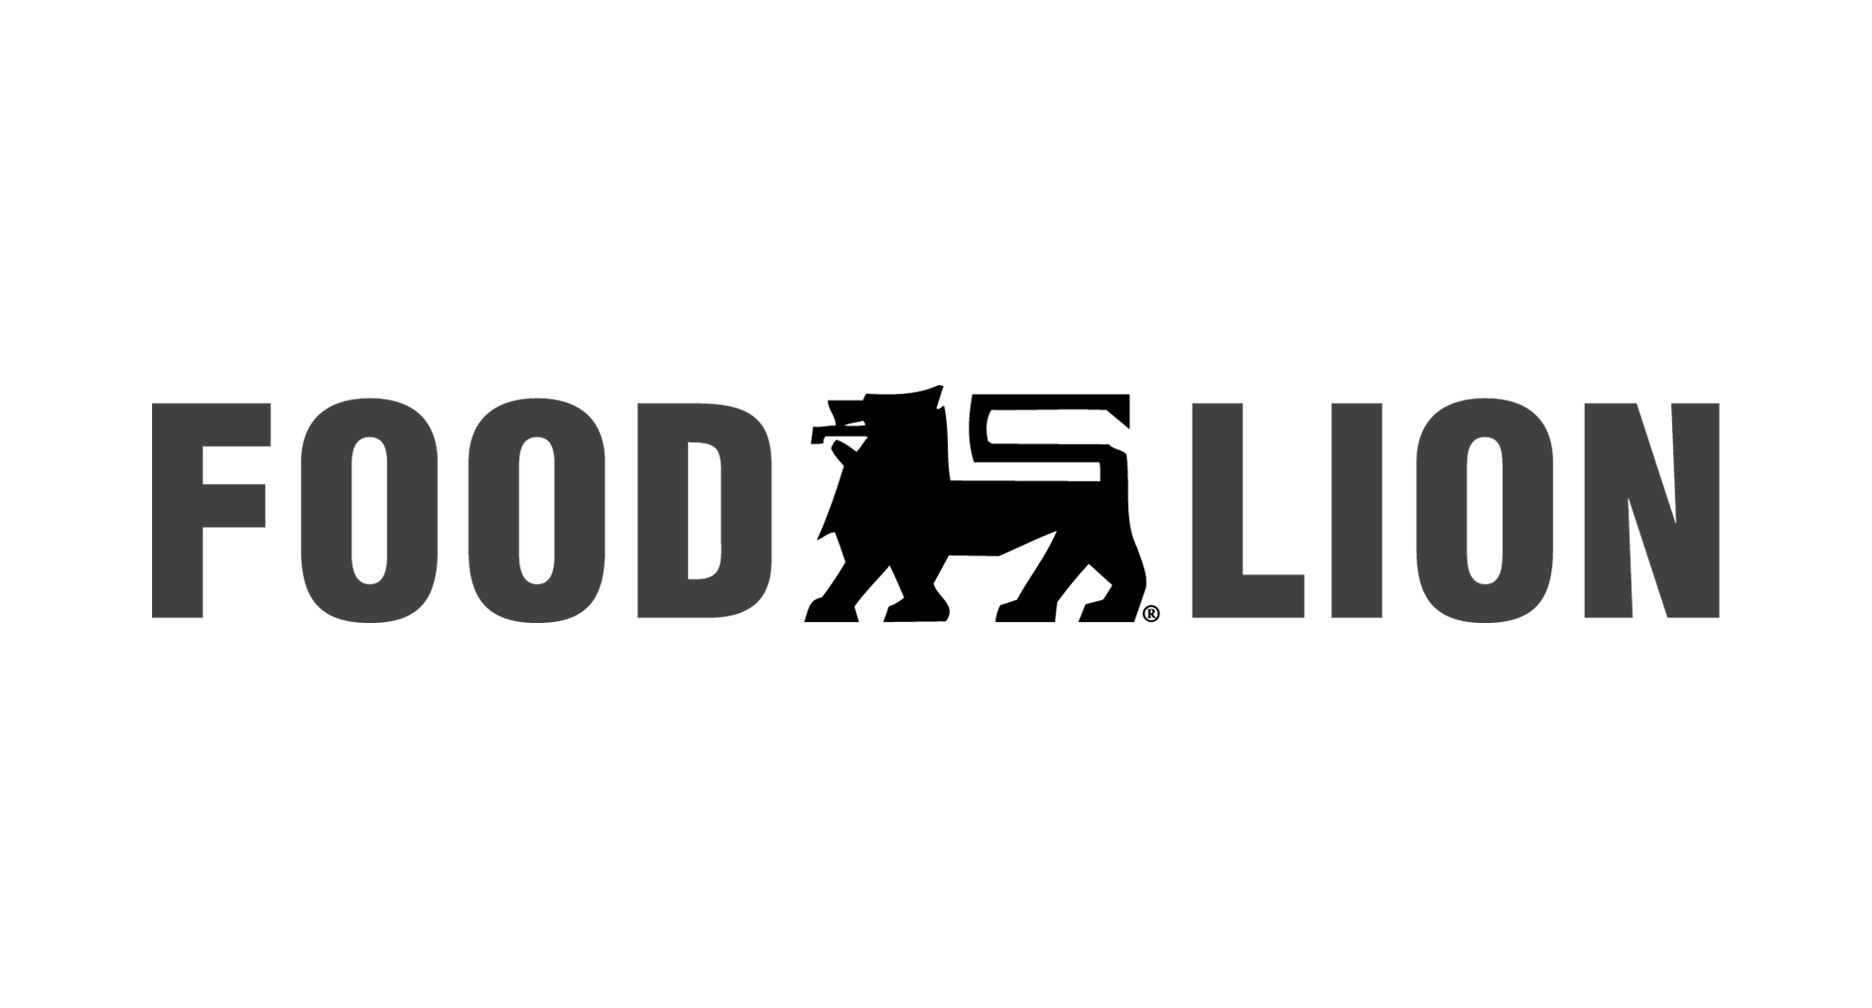 Food Lion Logo